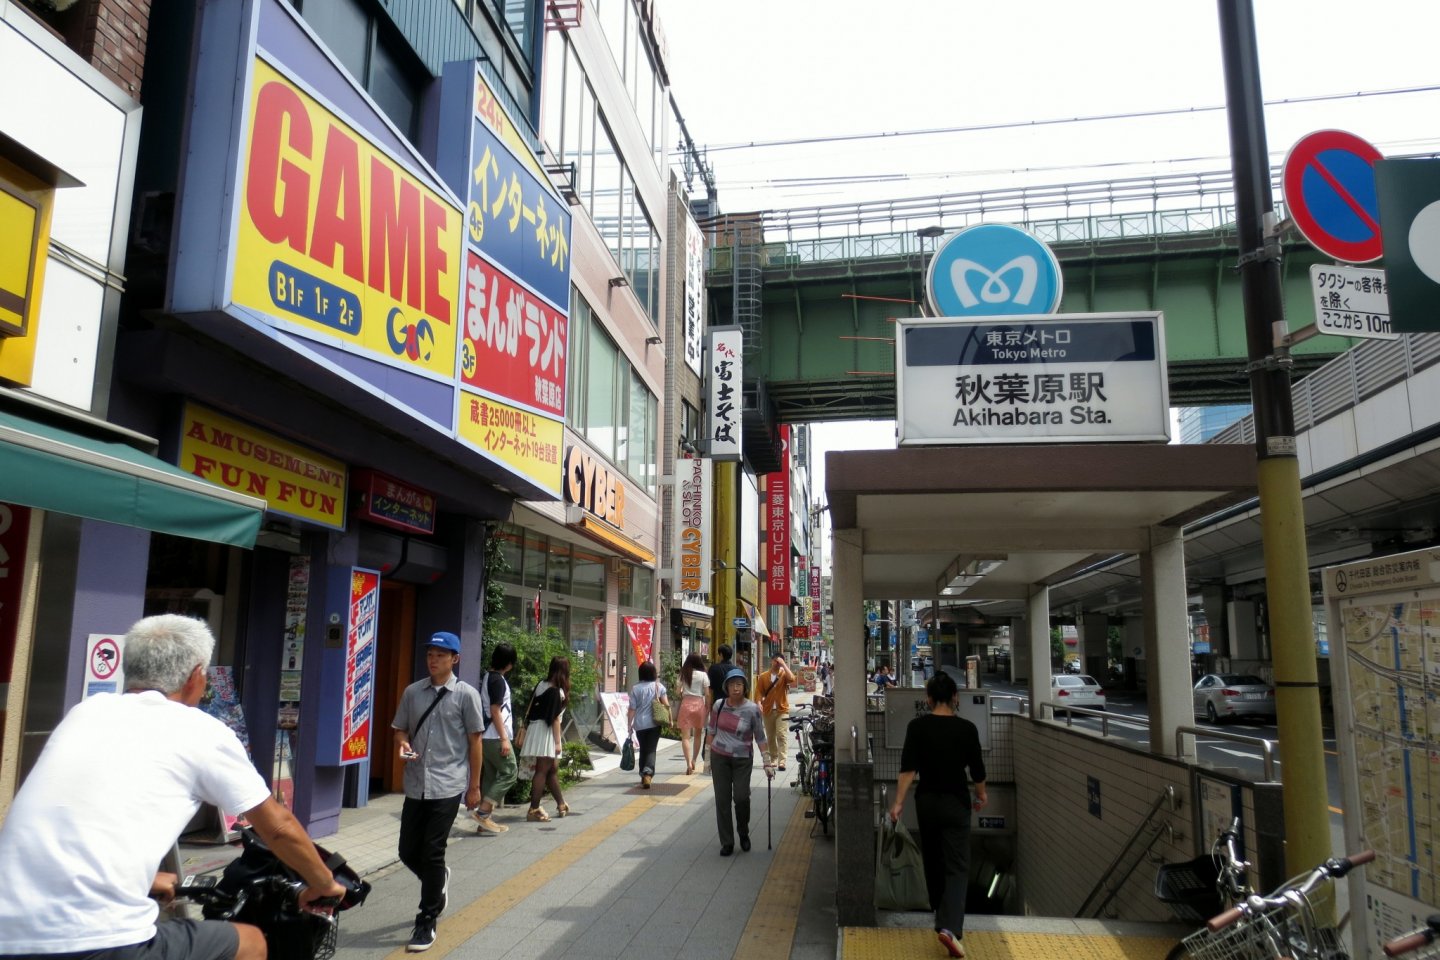 One of the exits along Showa Dori